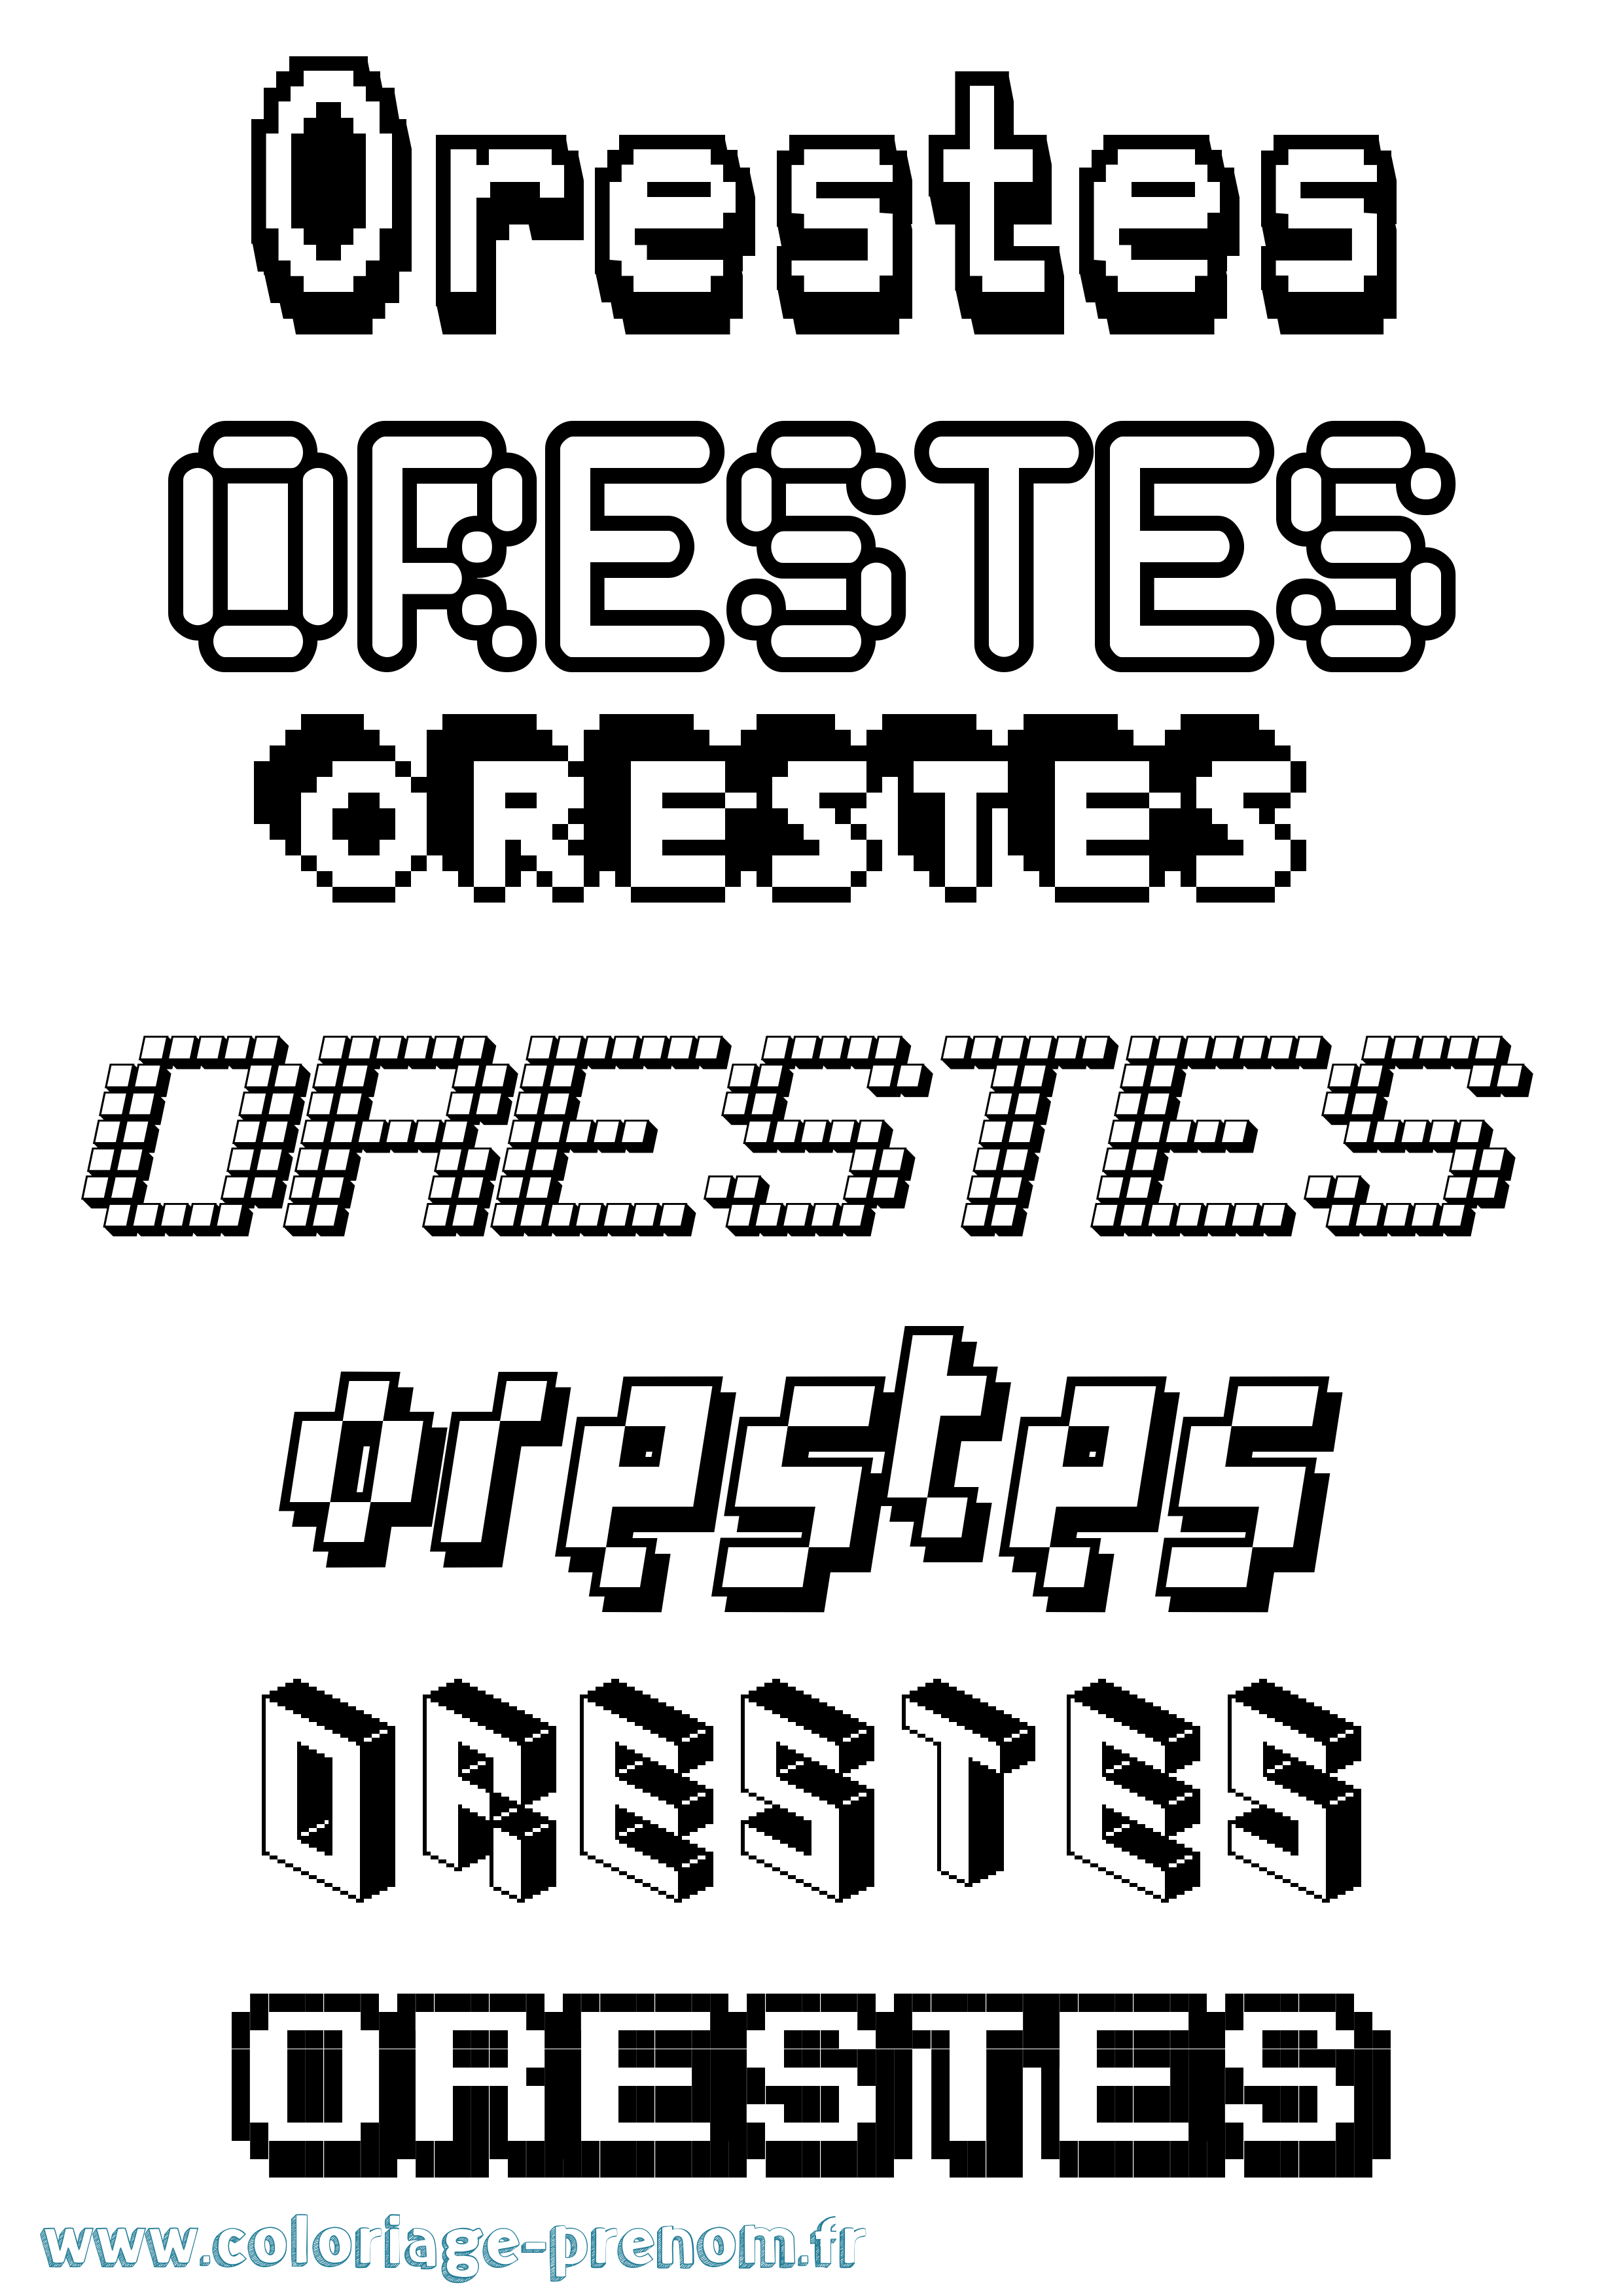 Coloriage prénom Orestes Pixel